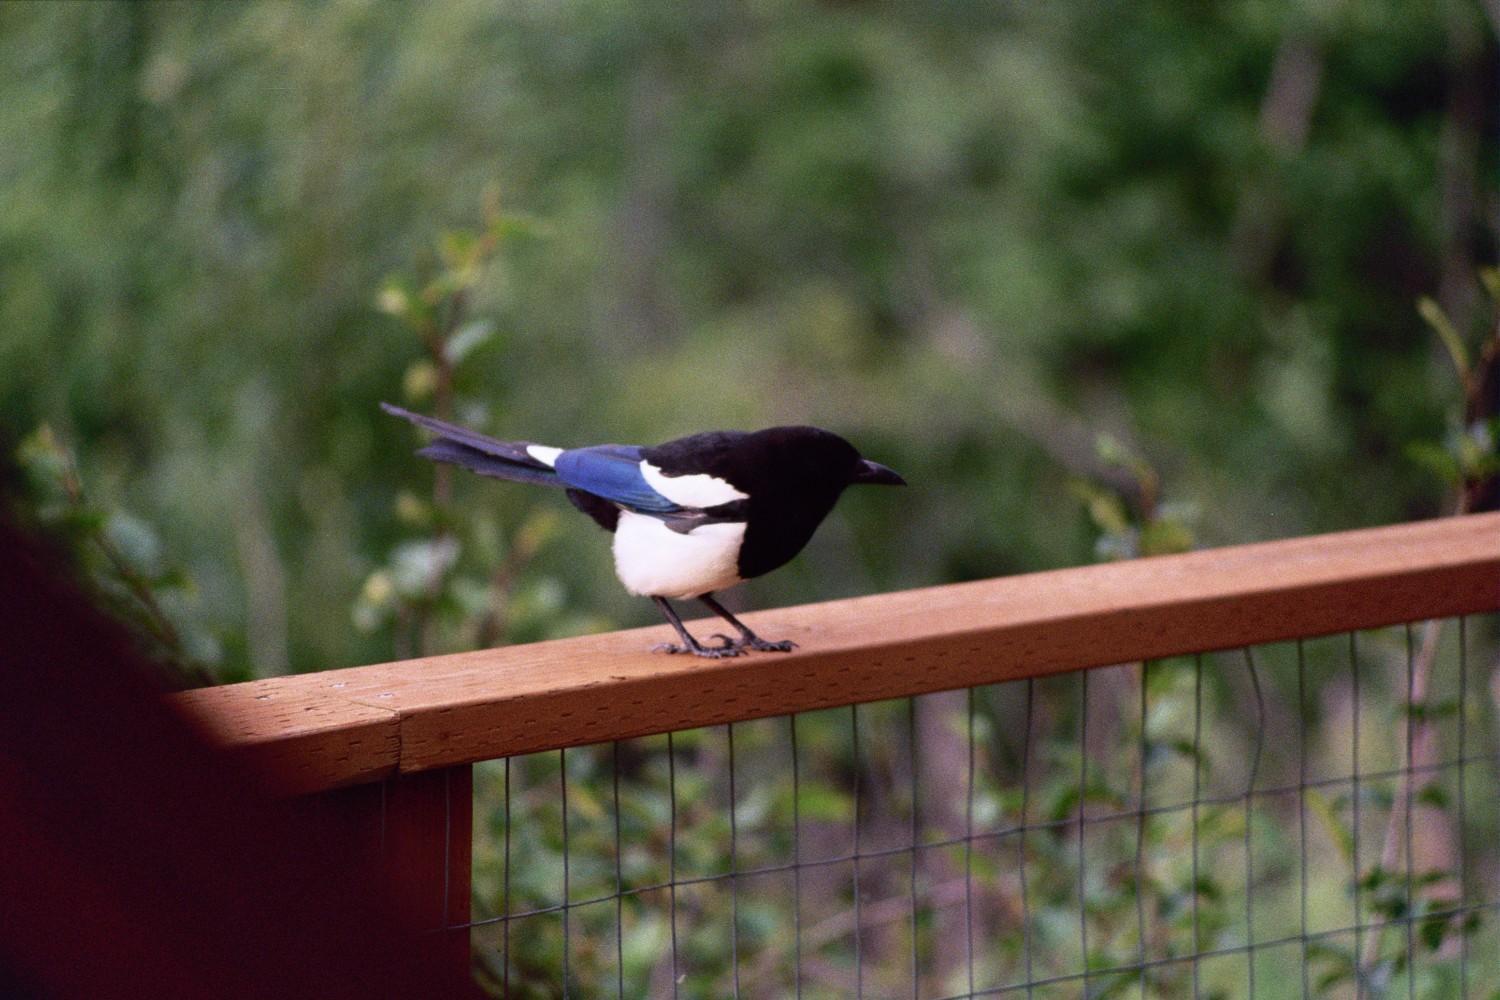 Black-billed Magpie Photo by Tony Heindel